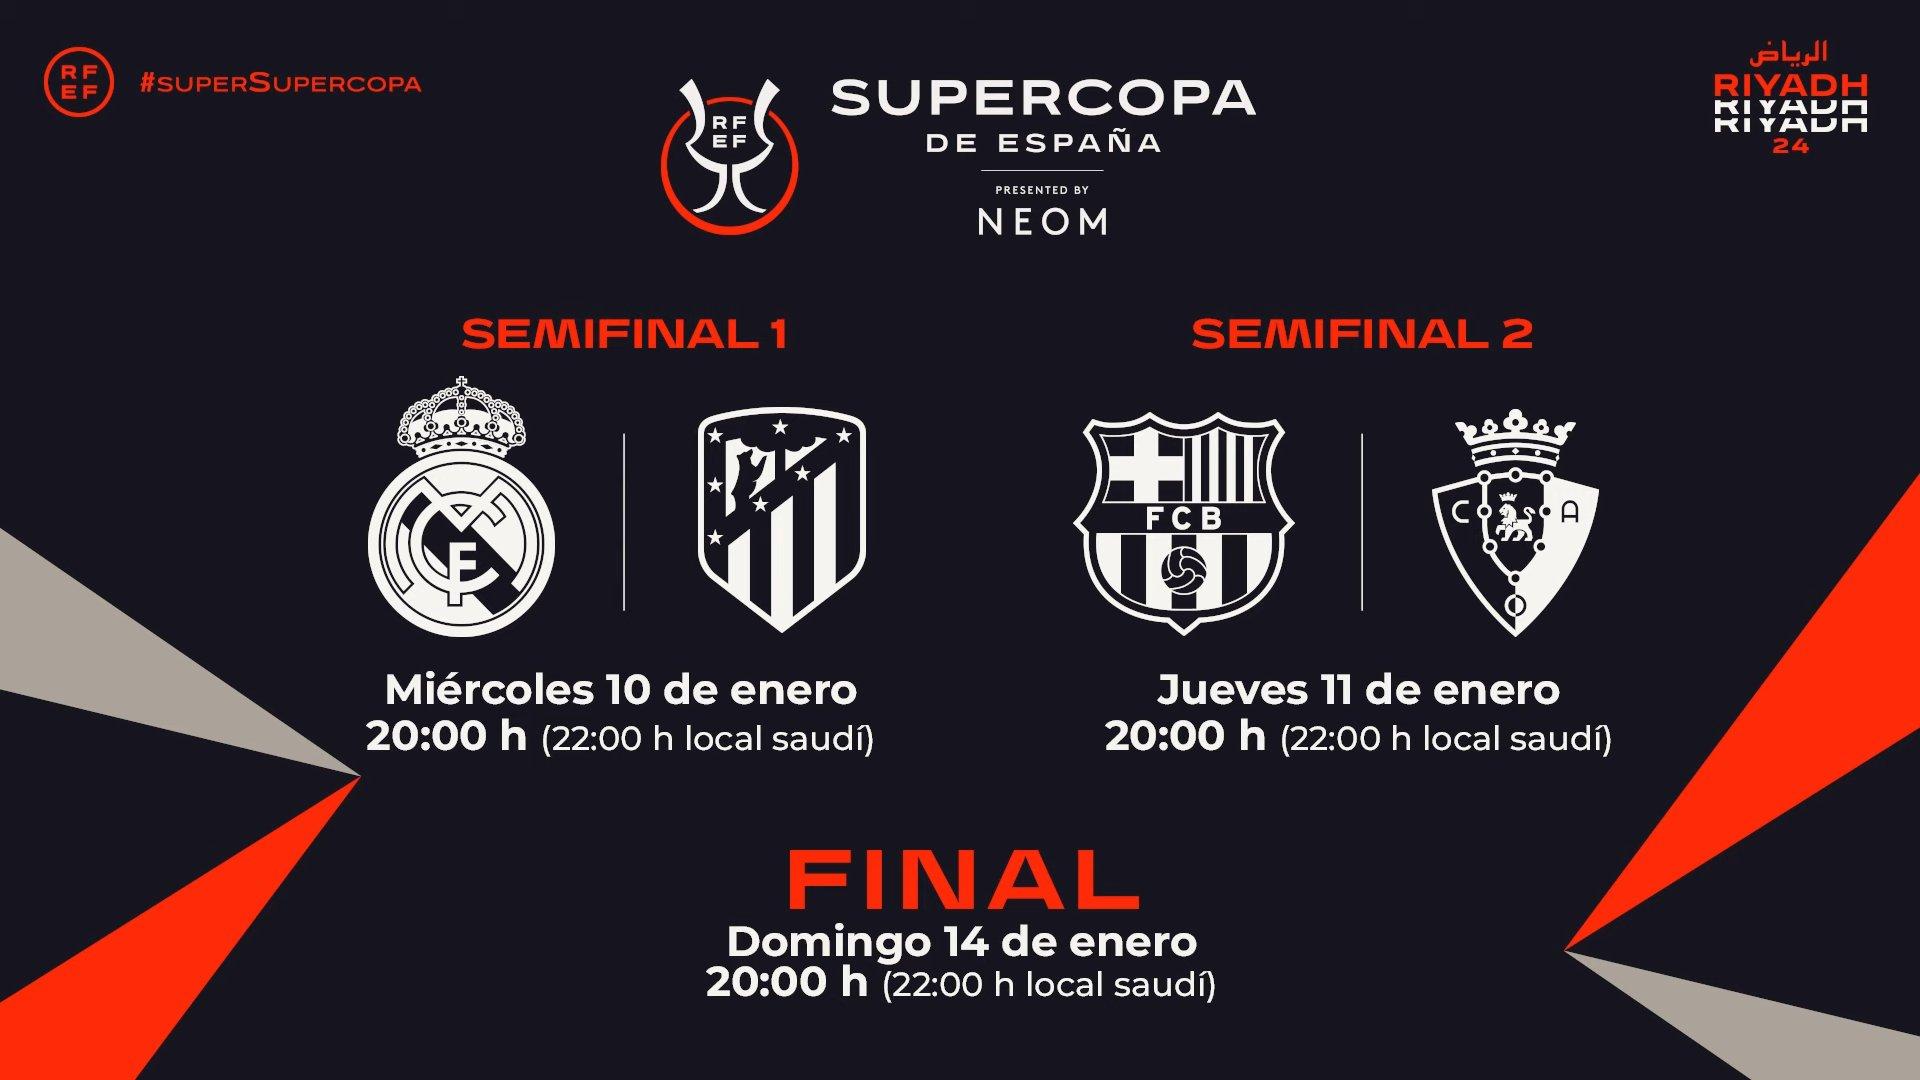 Supercopa de españa ver online gratis